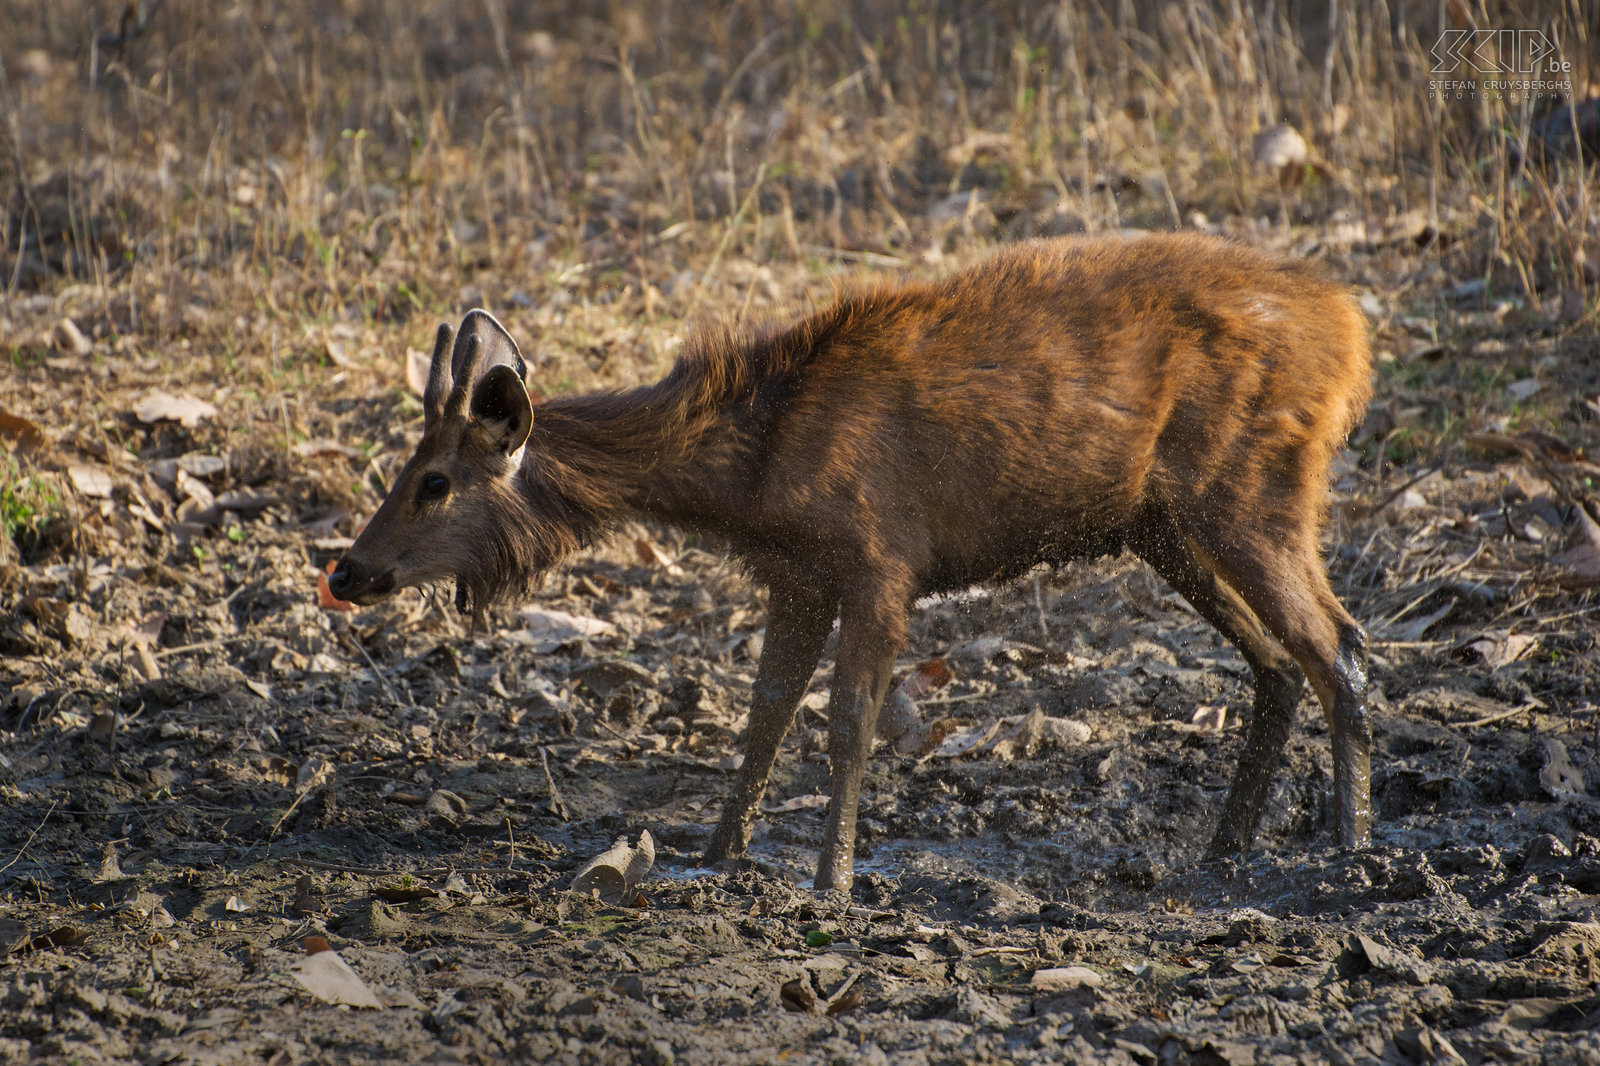 Panna - Sambar deer The sambar (Rusa unicolor) is a large deer native to the Indian subcontinent. Stefan Cruysberghs